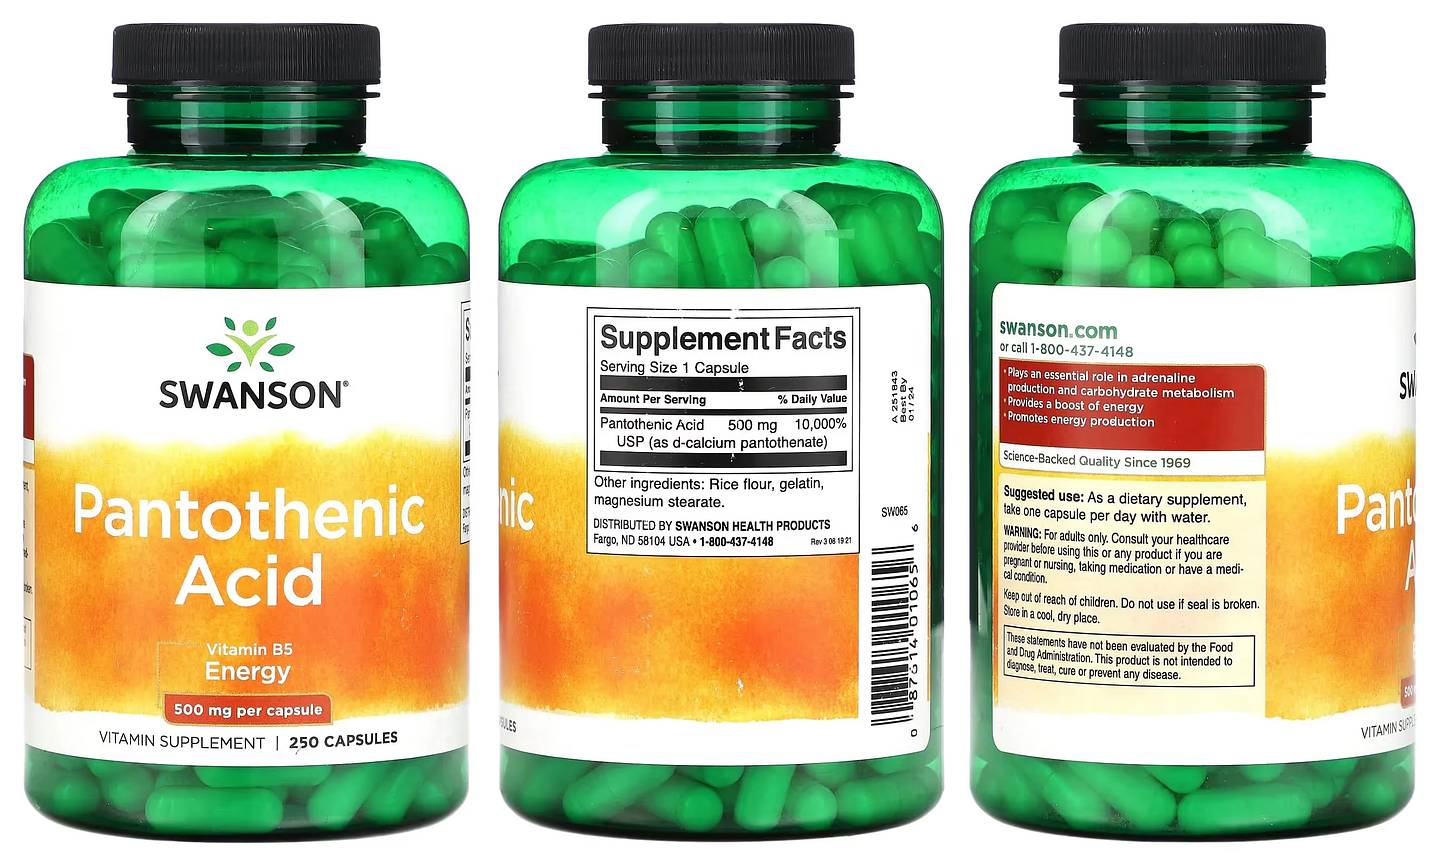 Swanson, Pantothenic Acid packaging